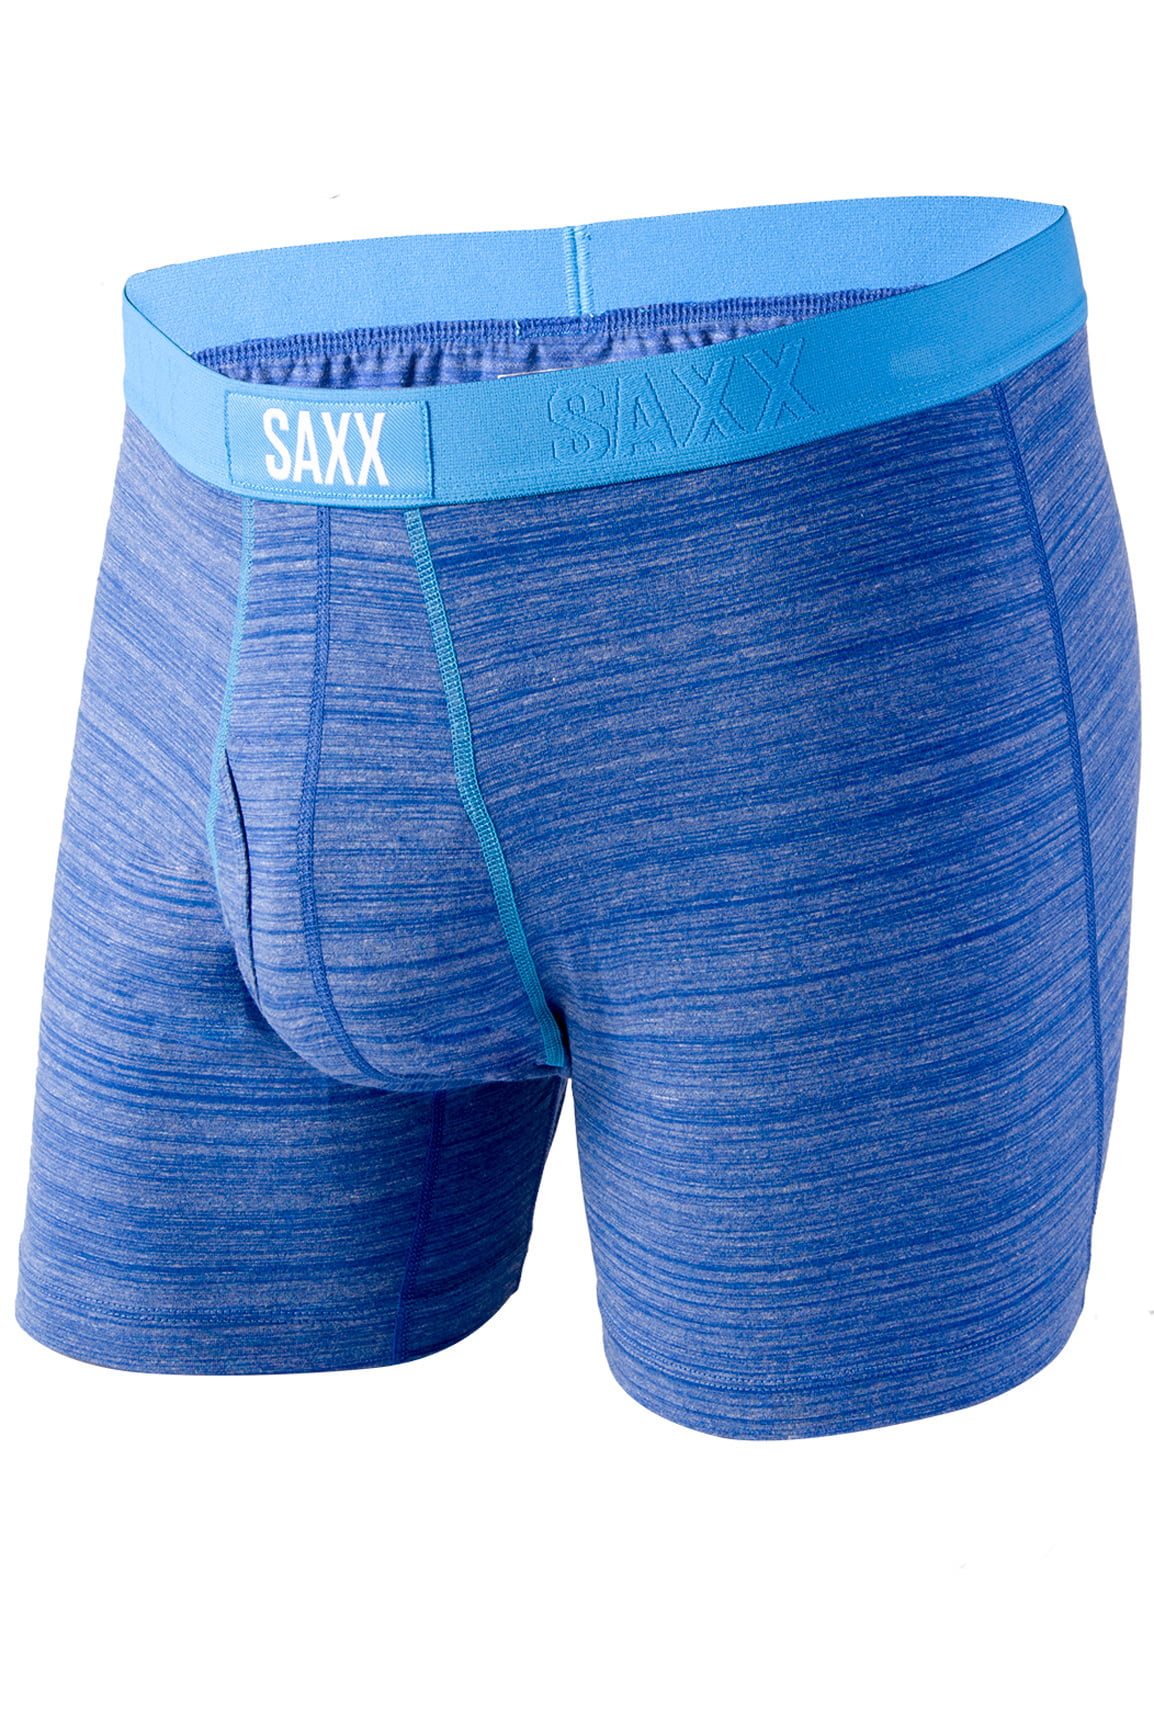 Saxx Underwear Ultra Tri-Blend Boxer SXBB13F - Walmart.com